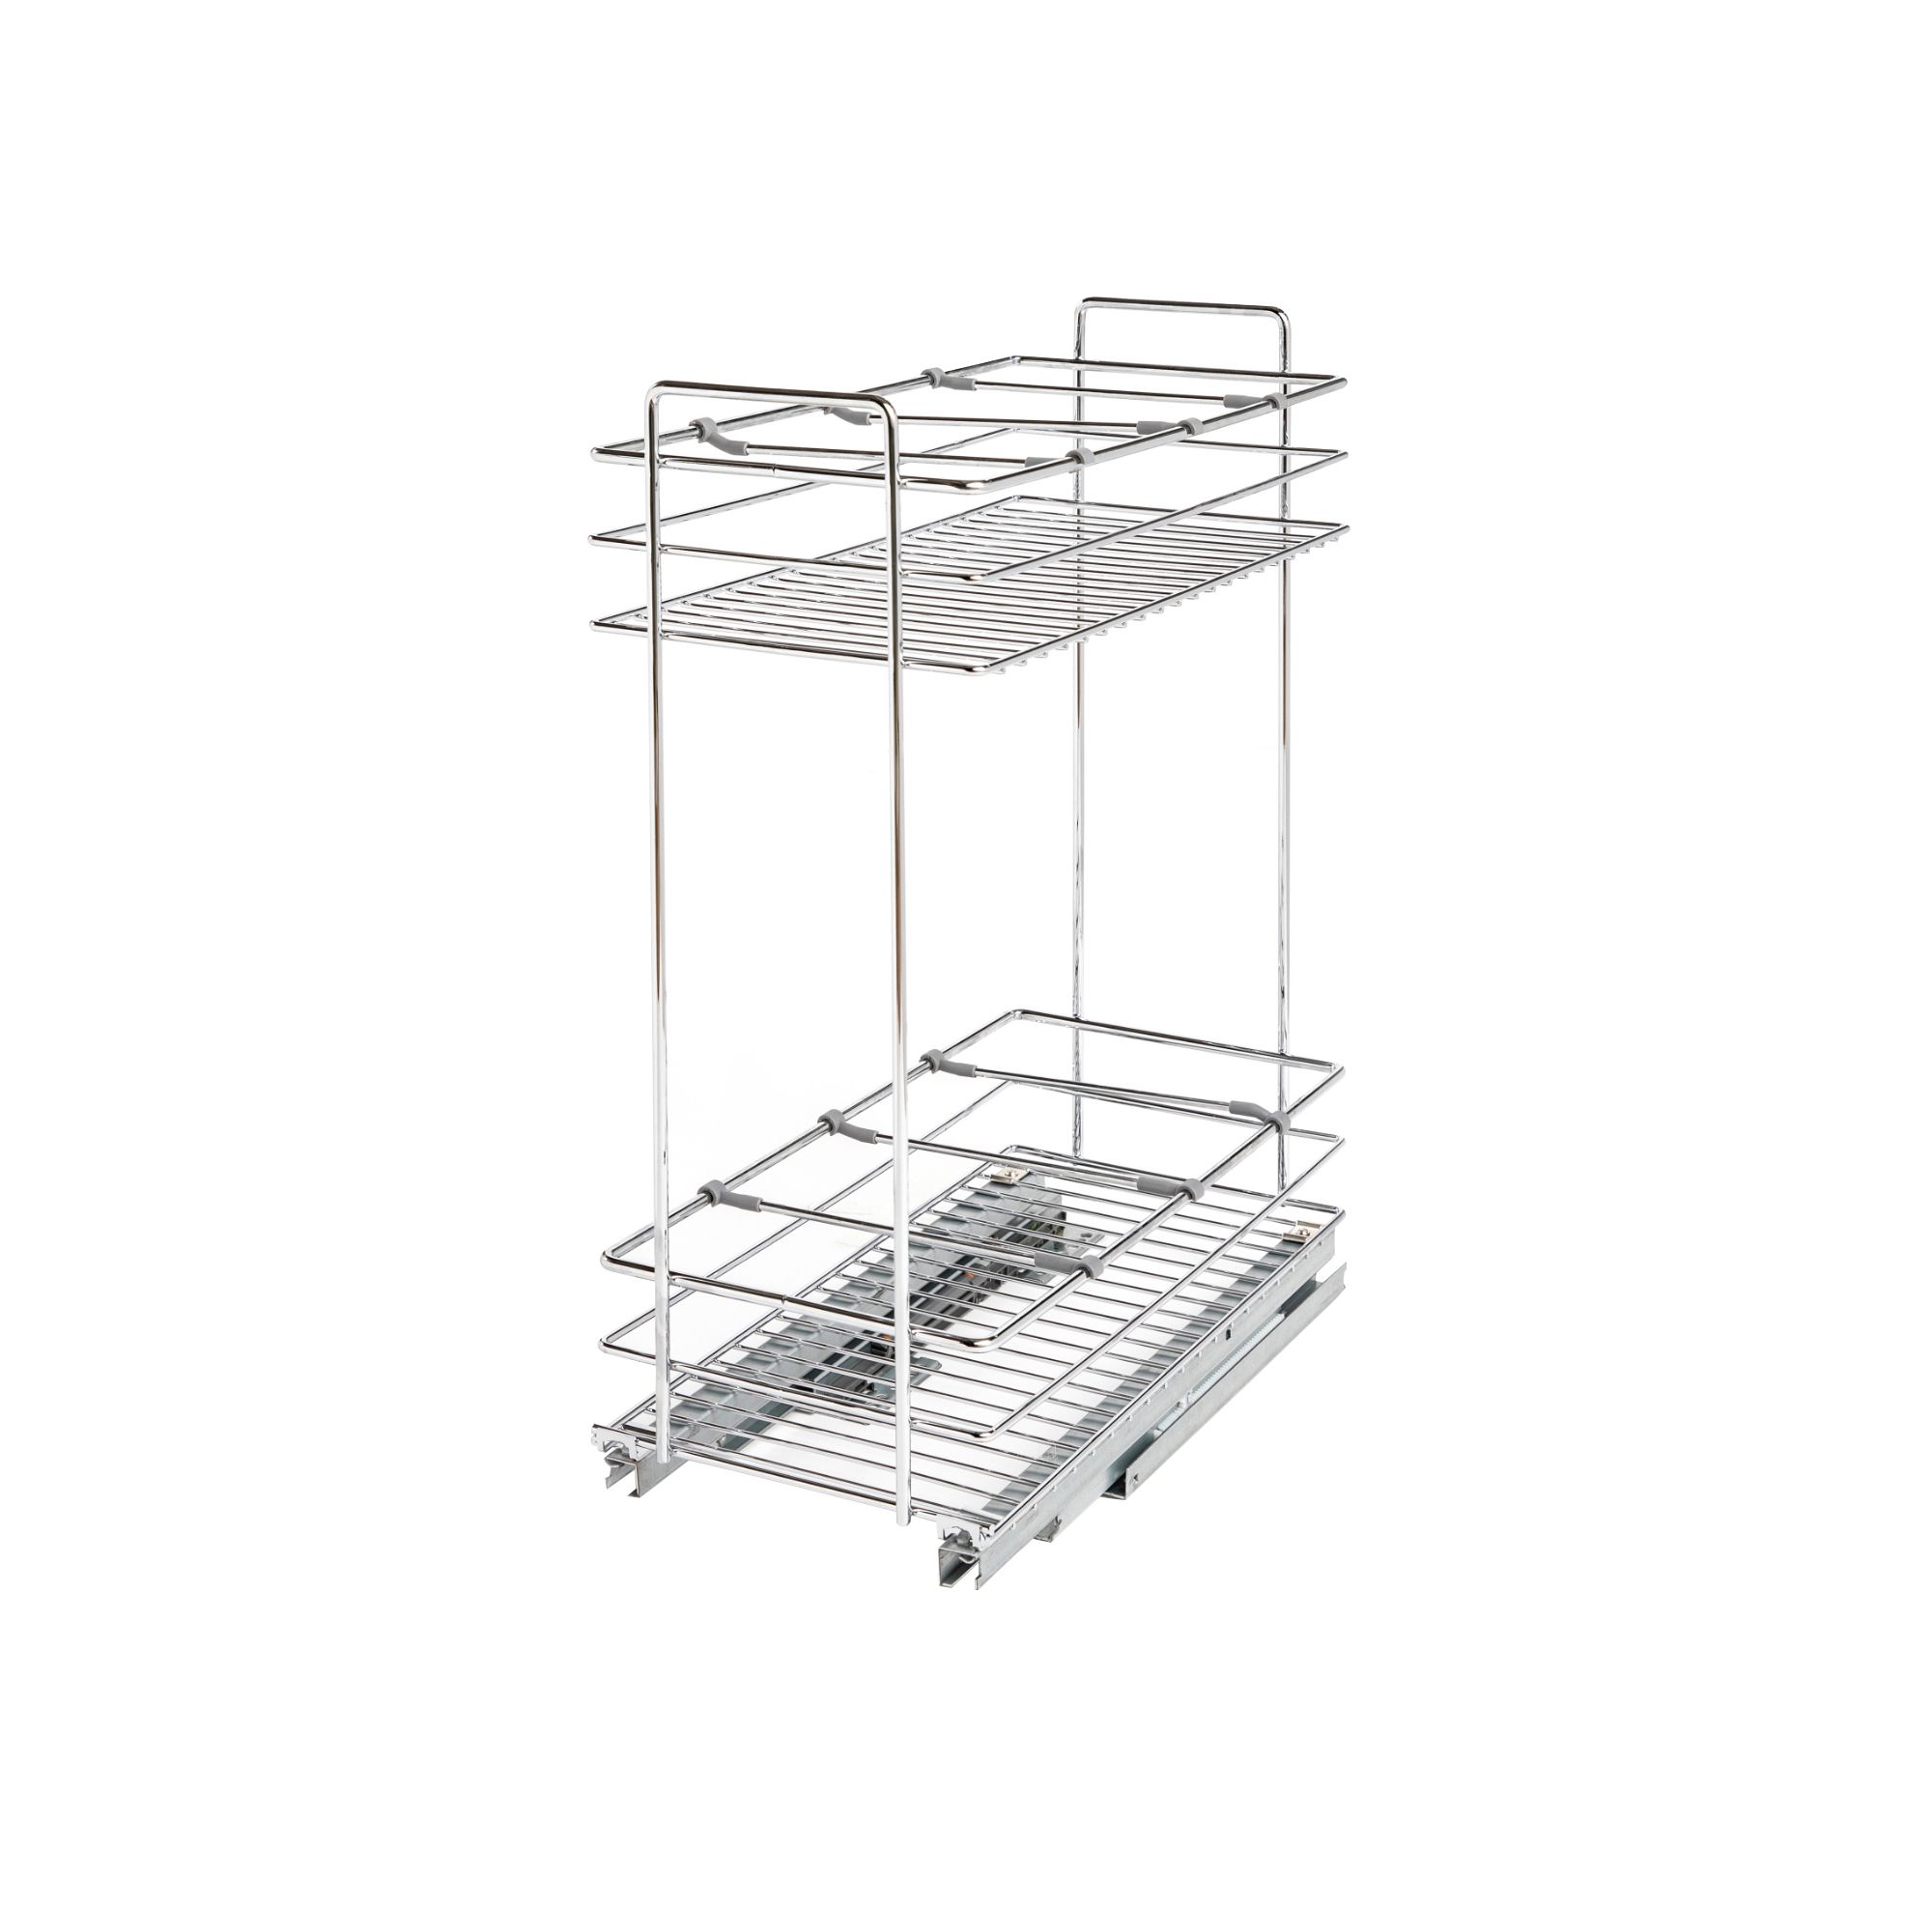 Essentials White Wire Cabinet Shelves